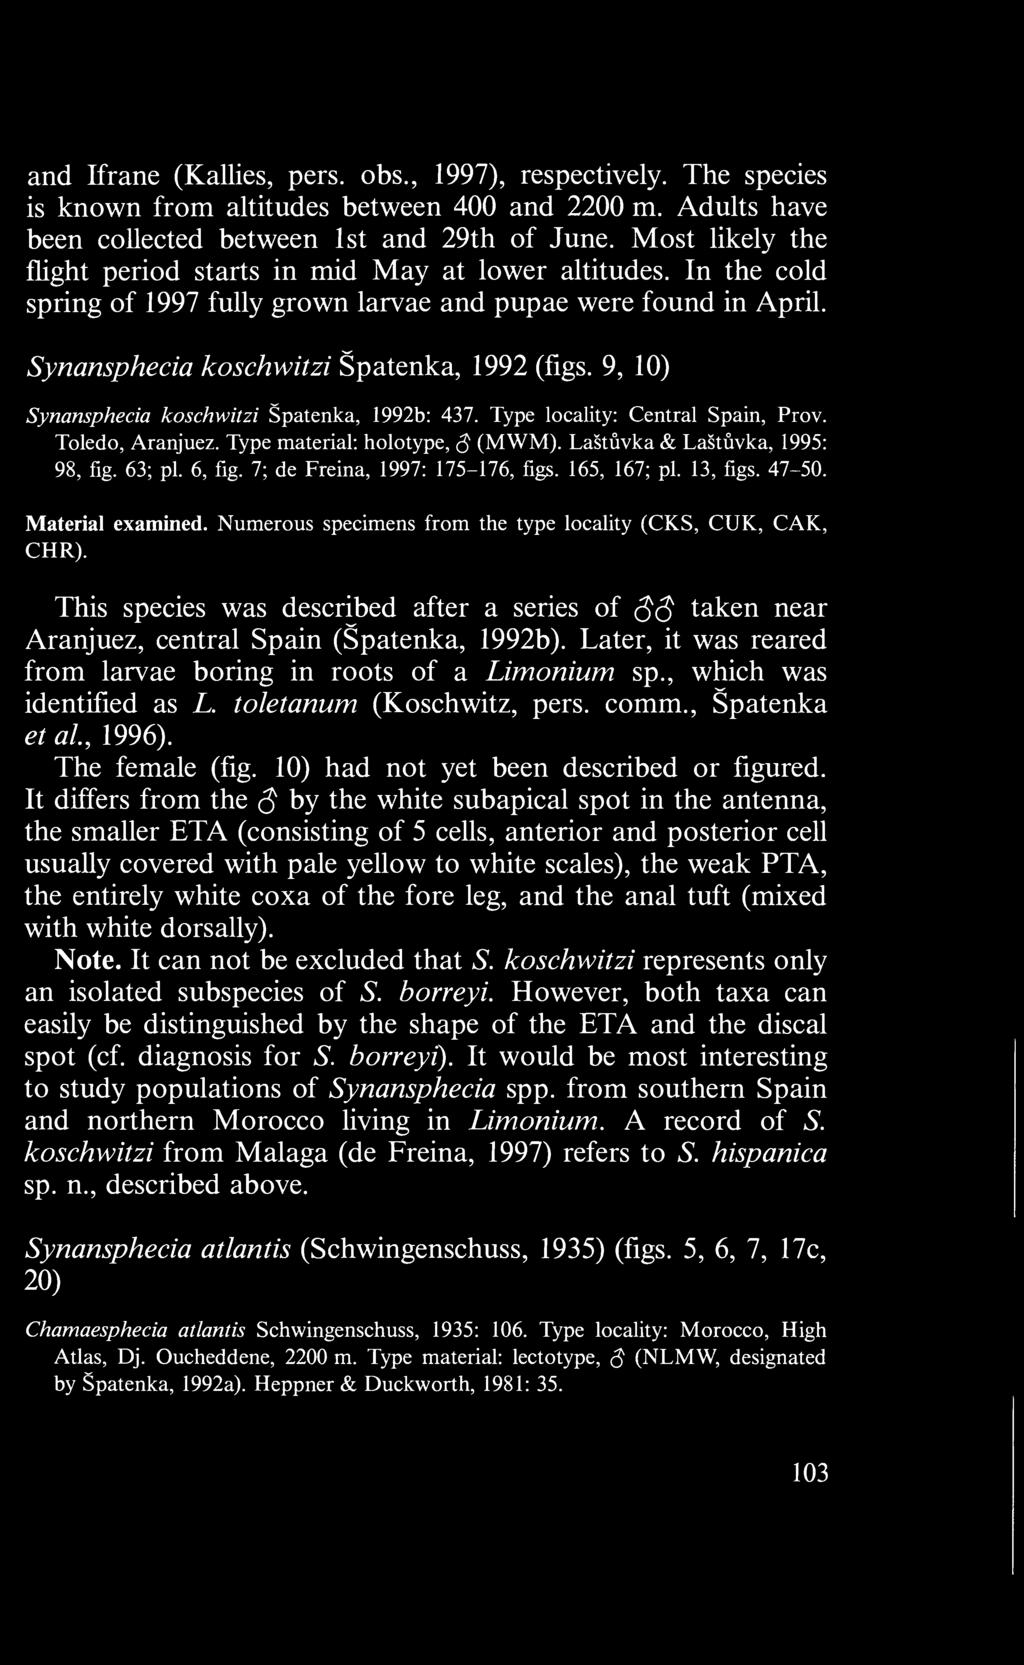 9, 10) Synansphecia koschwitzi Spatenka, 1992b: 437. Type locality: Central Spain, Prov. Toledo, Aranjuez. Type material: holotype, S (MWM). Lastûvka & Lastûvka, 1995: 98, fig. 63; pi. 6, fig.